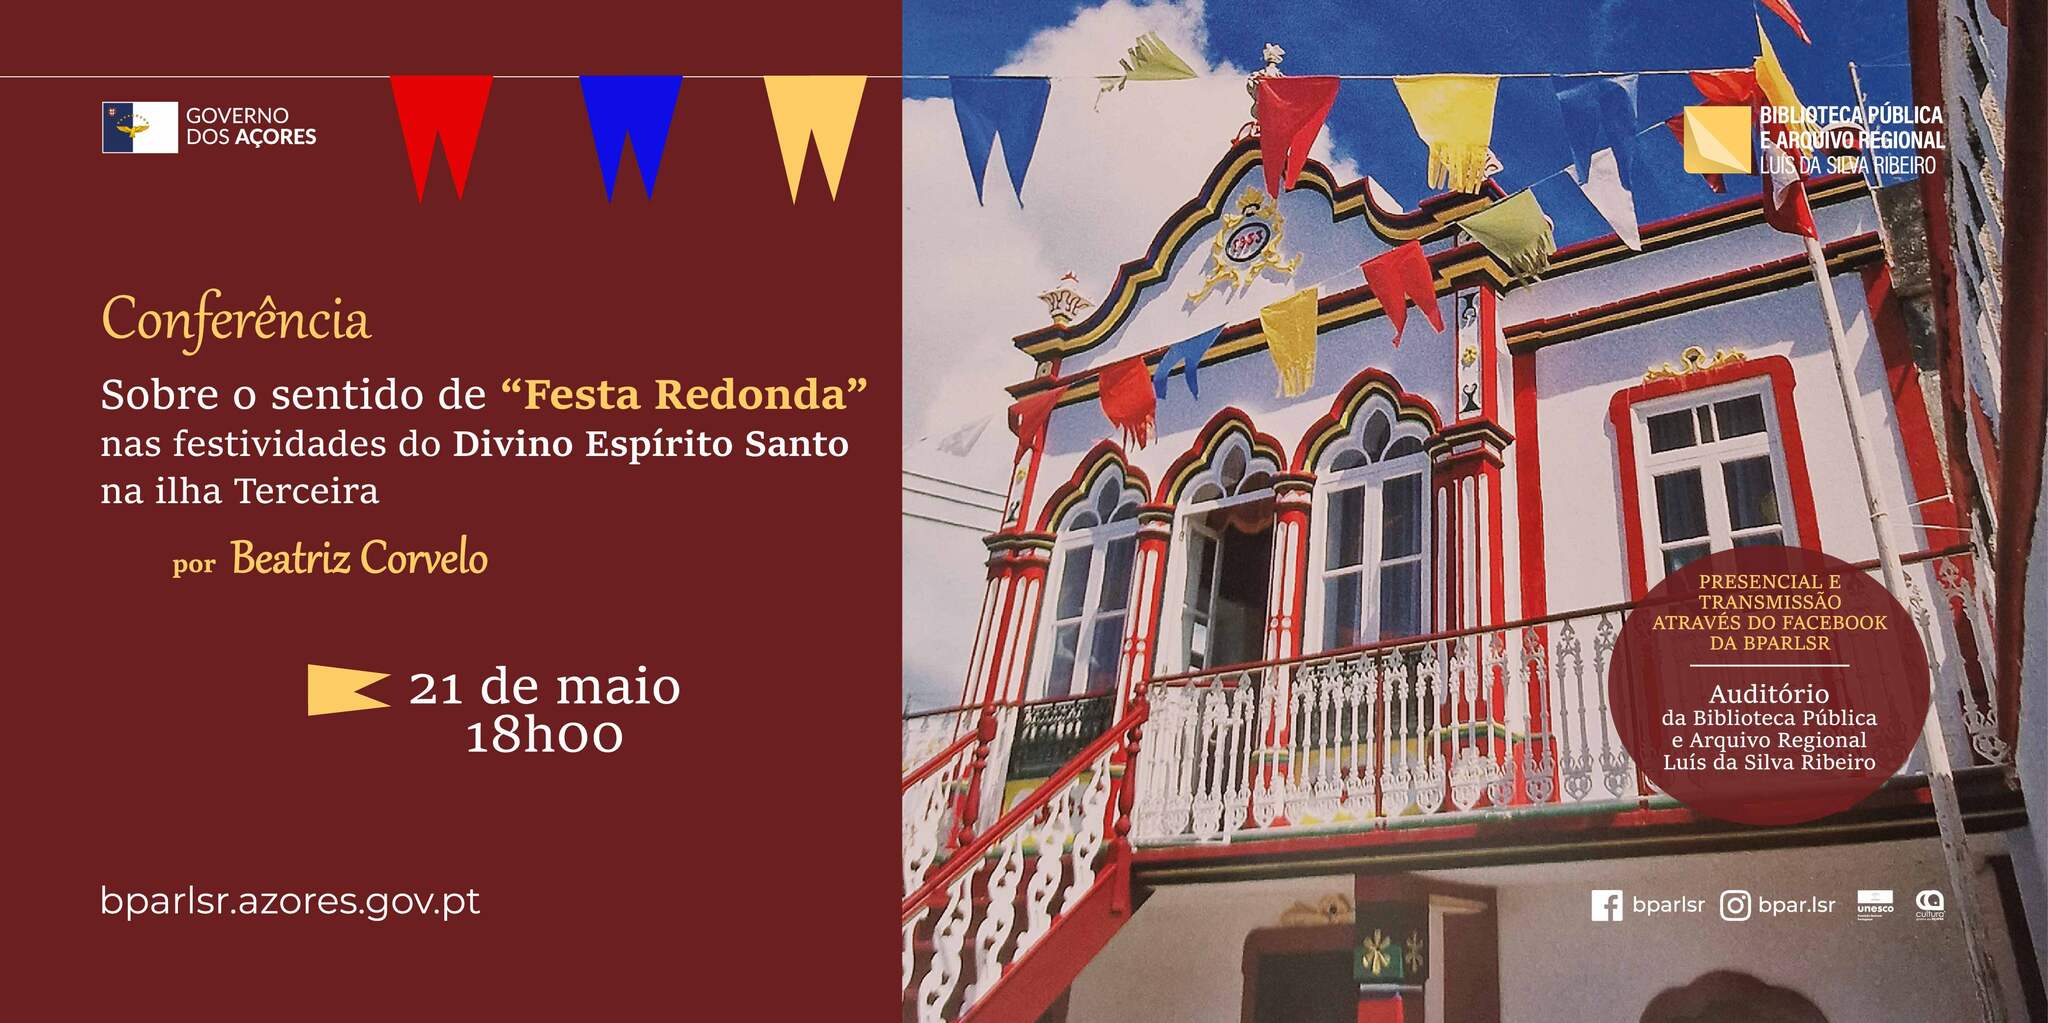 Sobre o sentido de “Festa Redonda”,  nas festividades do Divino Espírito Santo da ilha Terceira